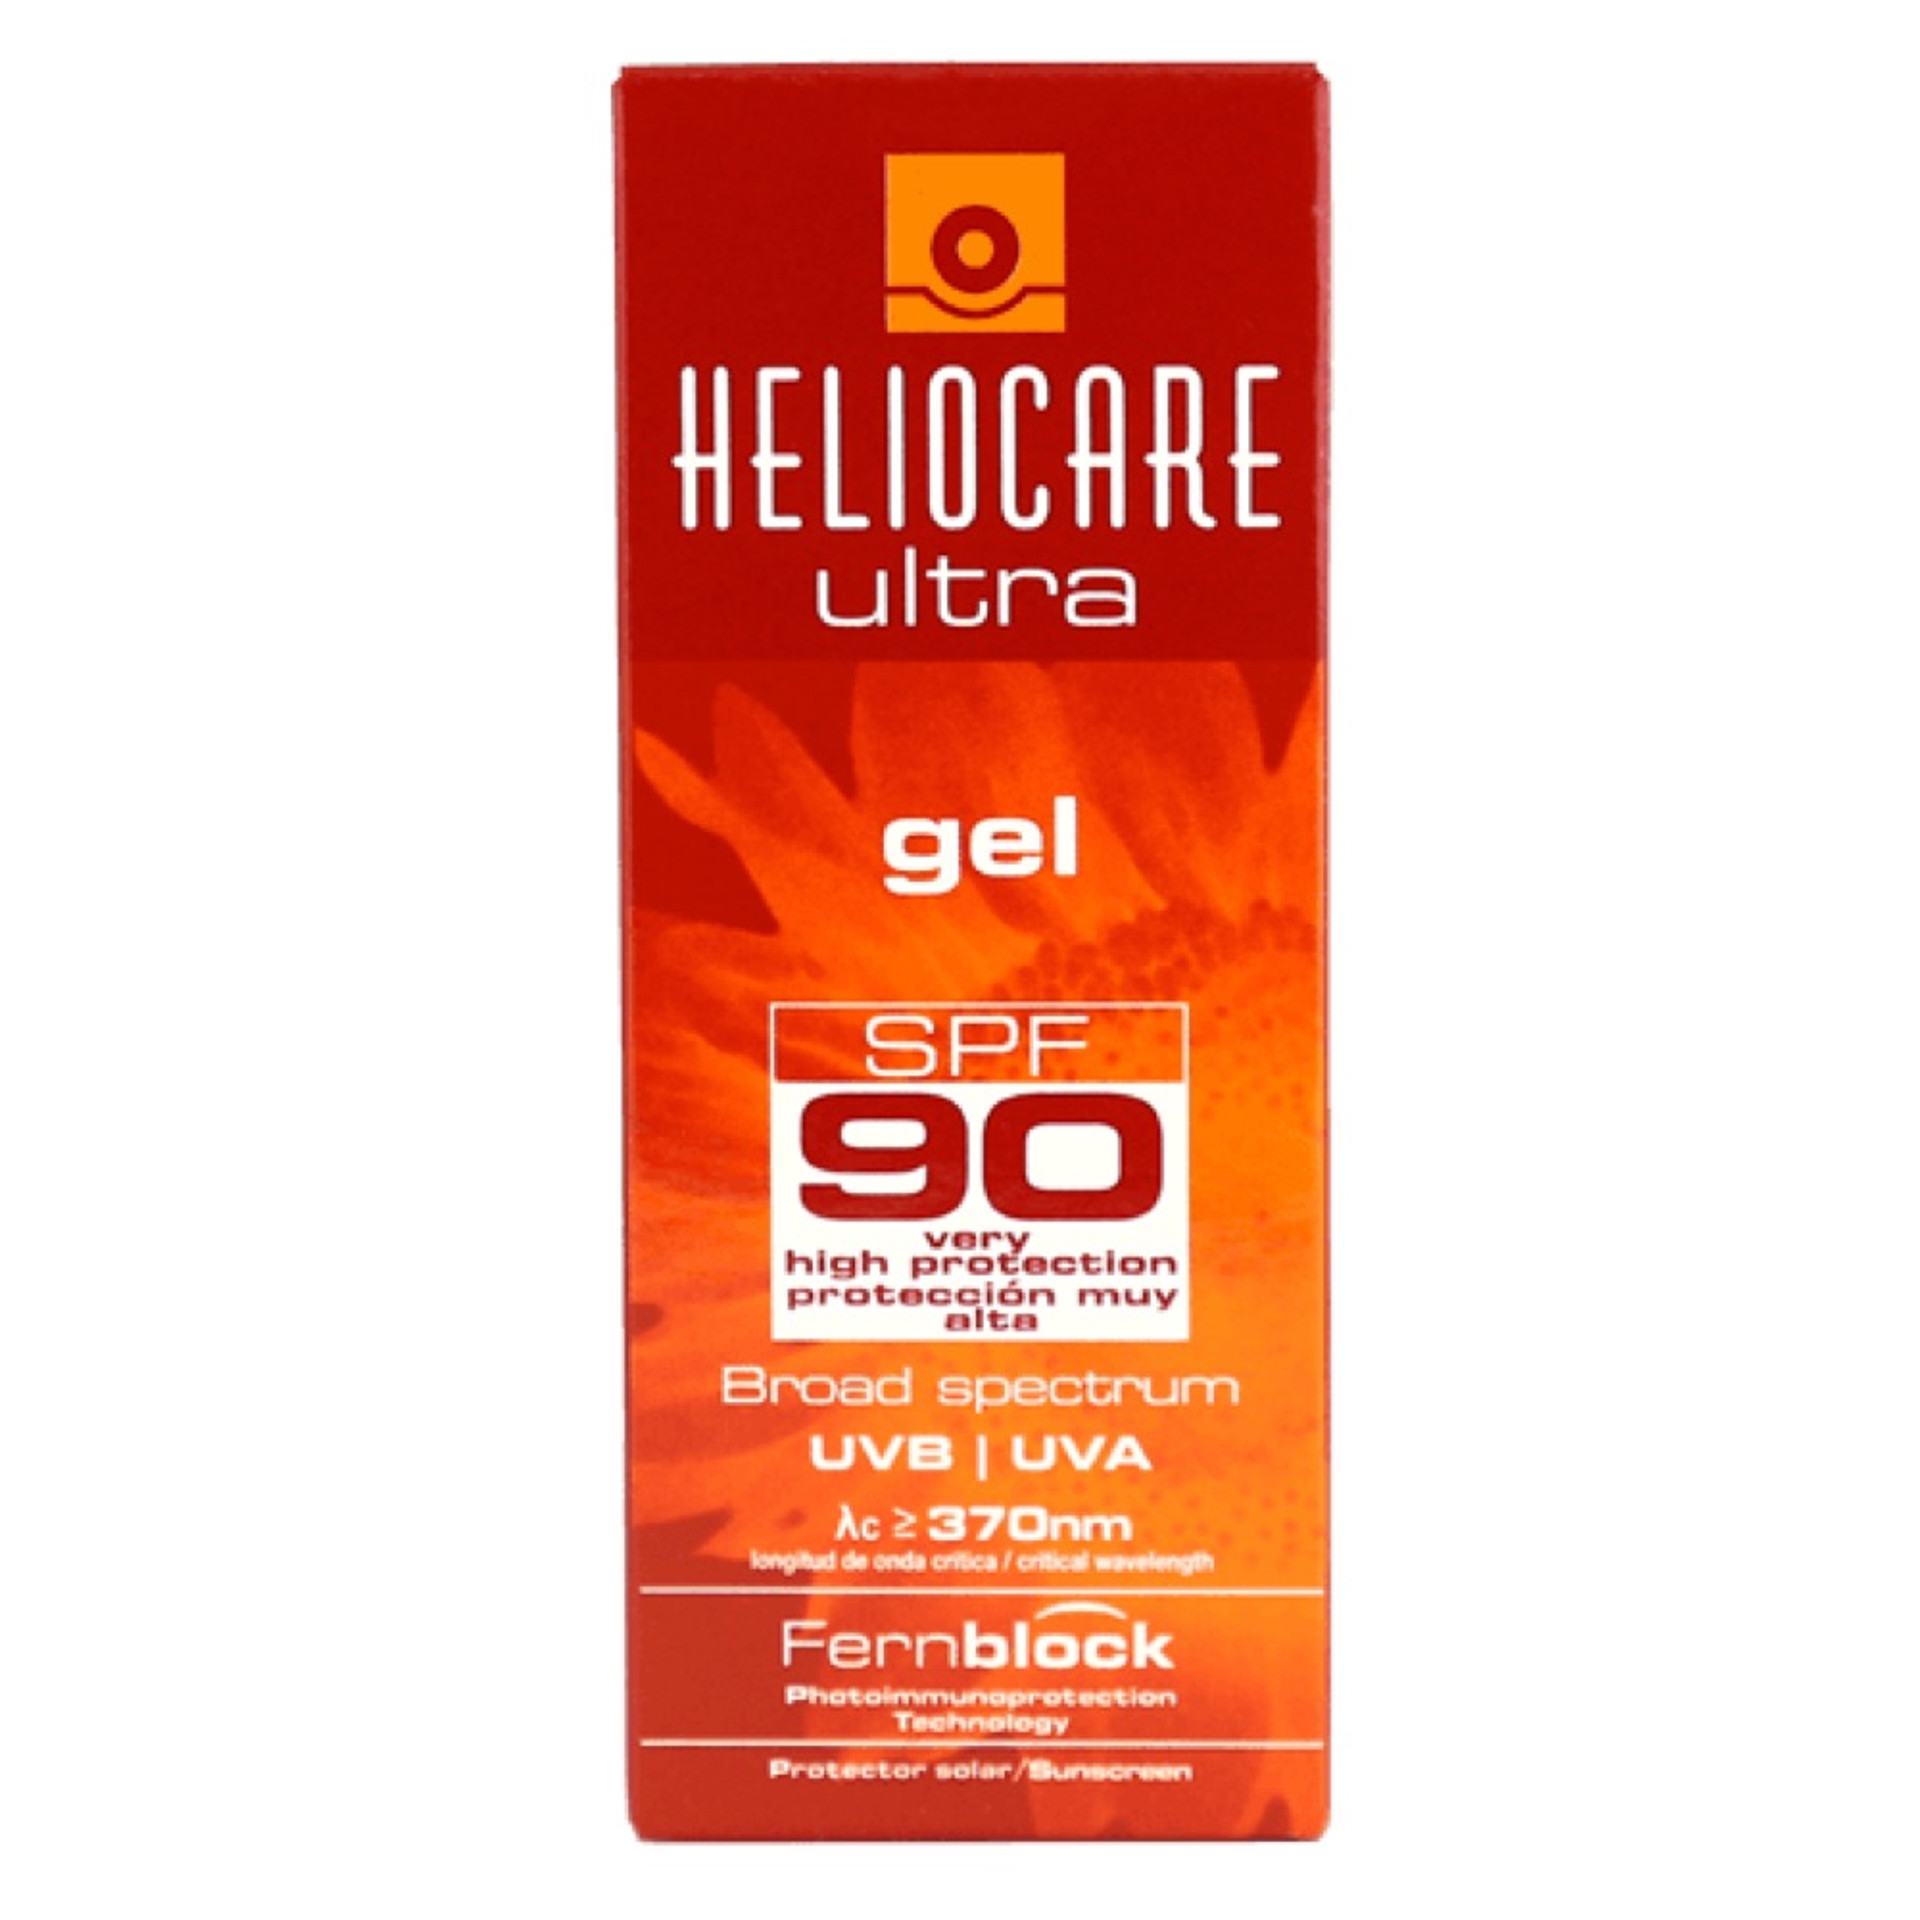 Heliocare Ultra Gel SPF 90